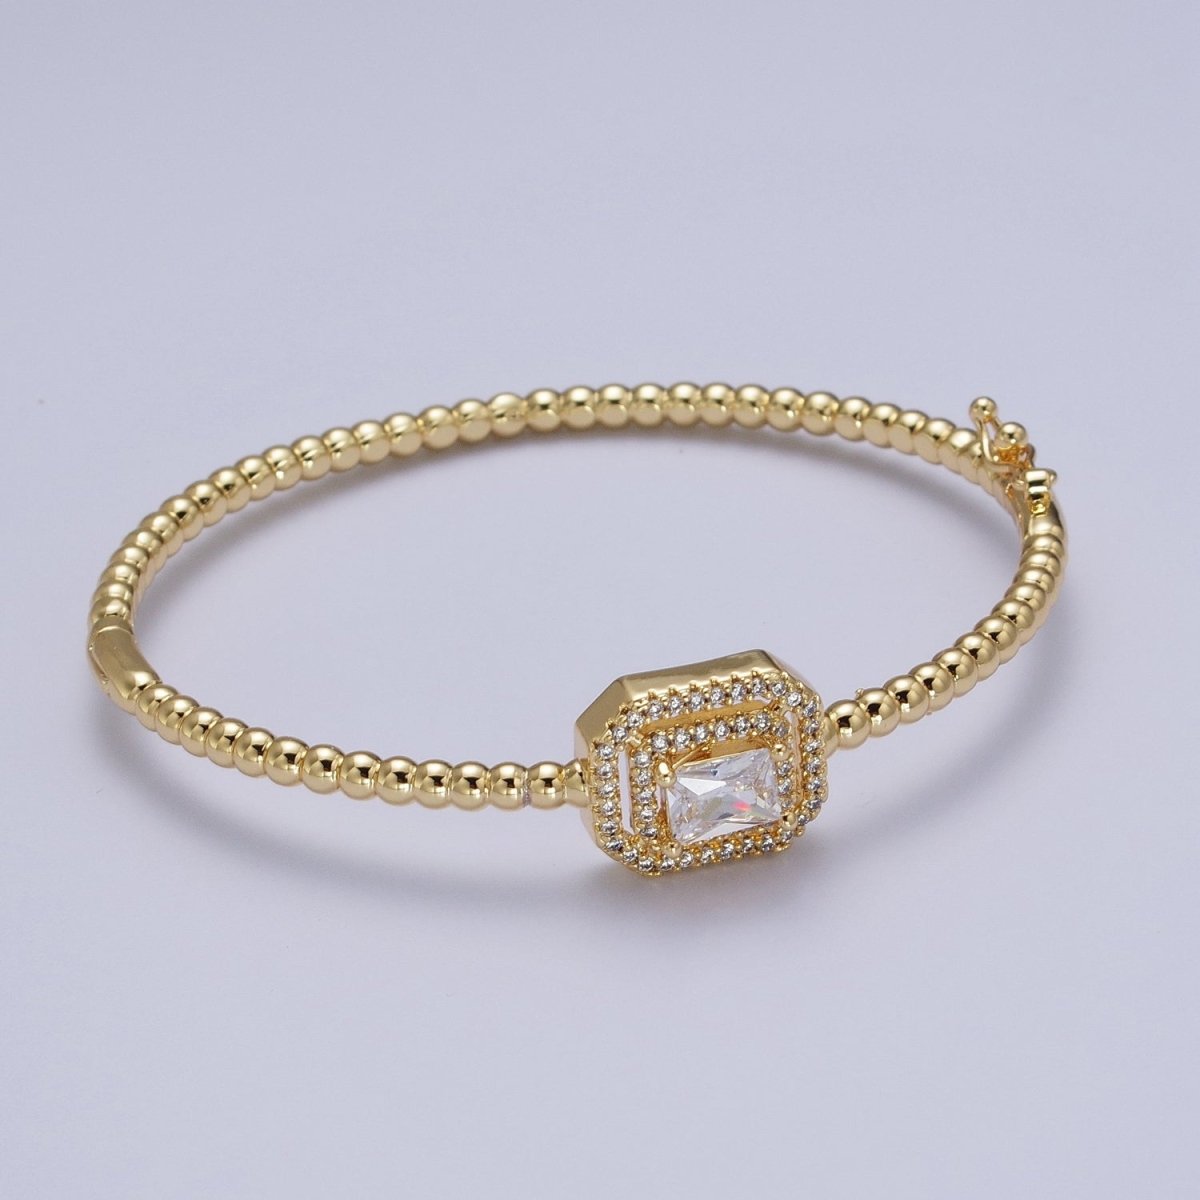 24K Gold Filled Baguette Cubic Zirconia Beaded Bangle Bracelet | WA-1414 - WA-1417 Clearance Pricing - DLUXCA